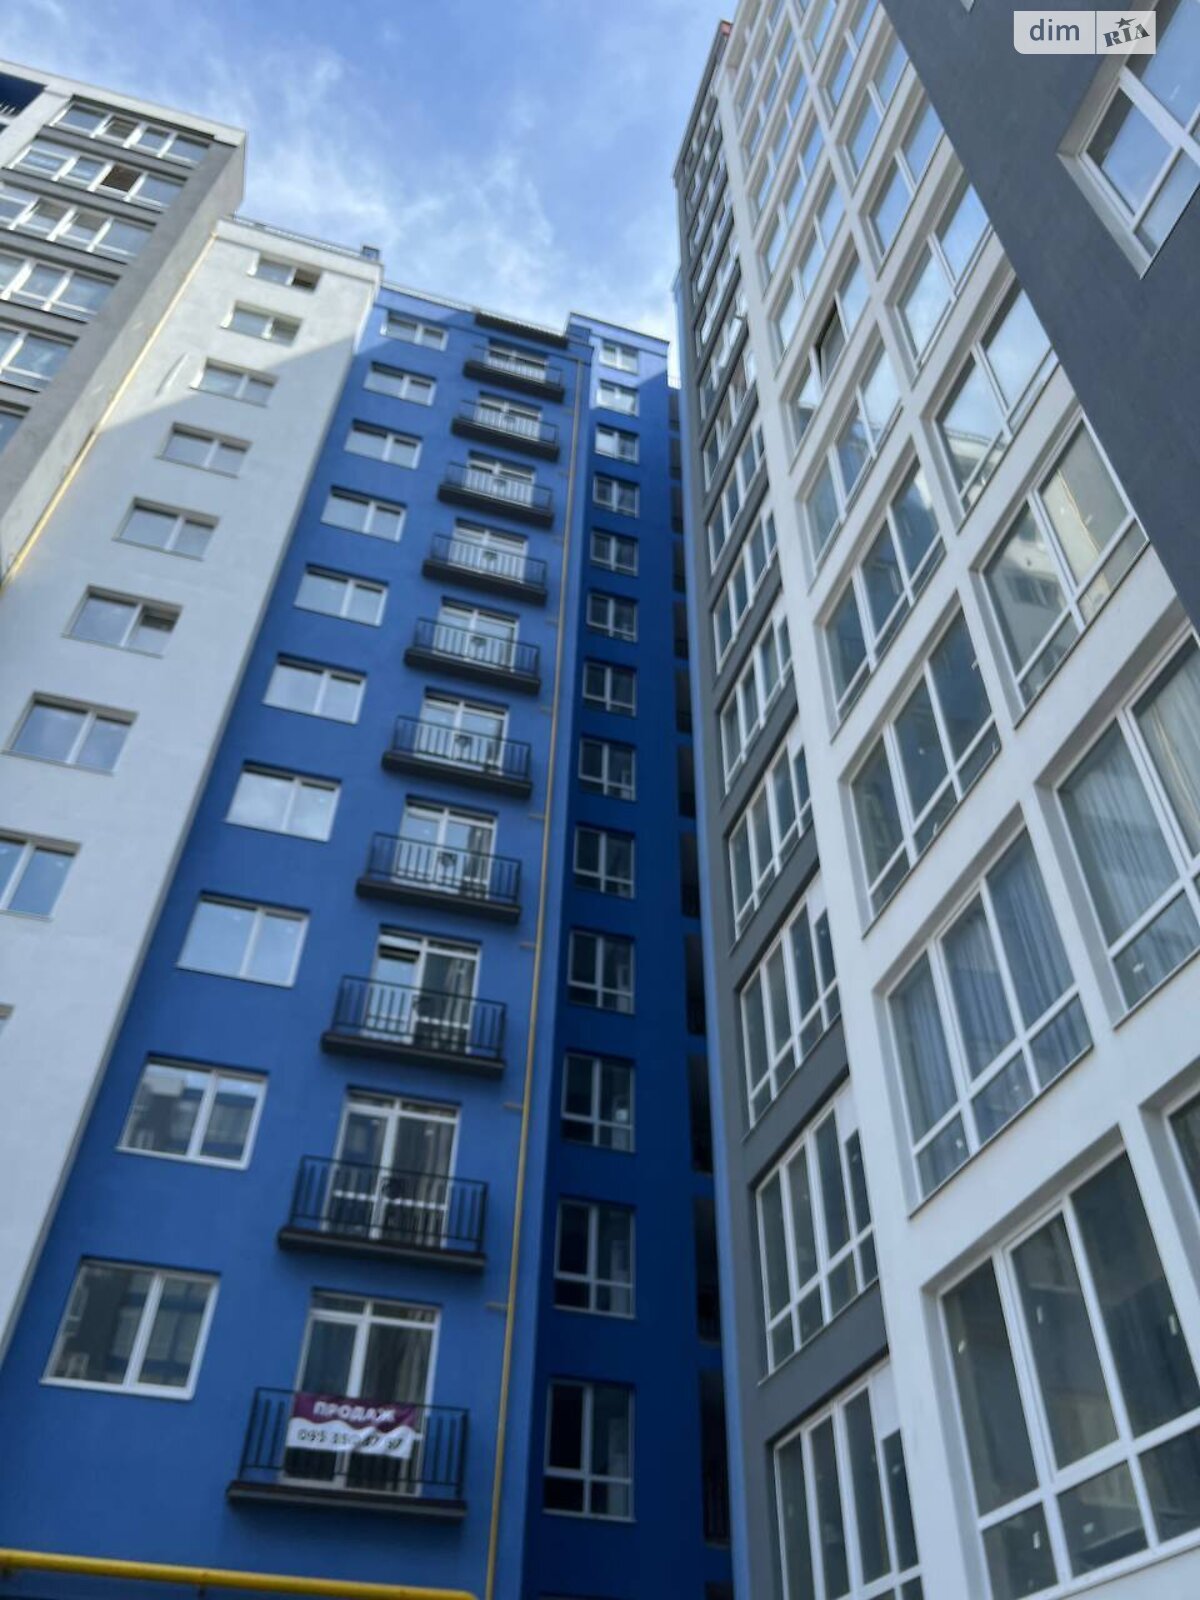 Продажа однокомнатной квартиры в Ивано-Франковске, на ул. Княгинин, район Княгинин фото 1